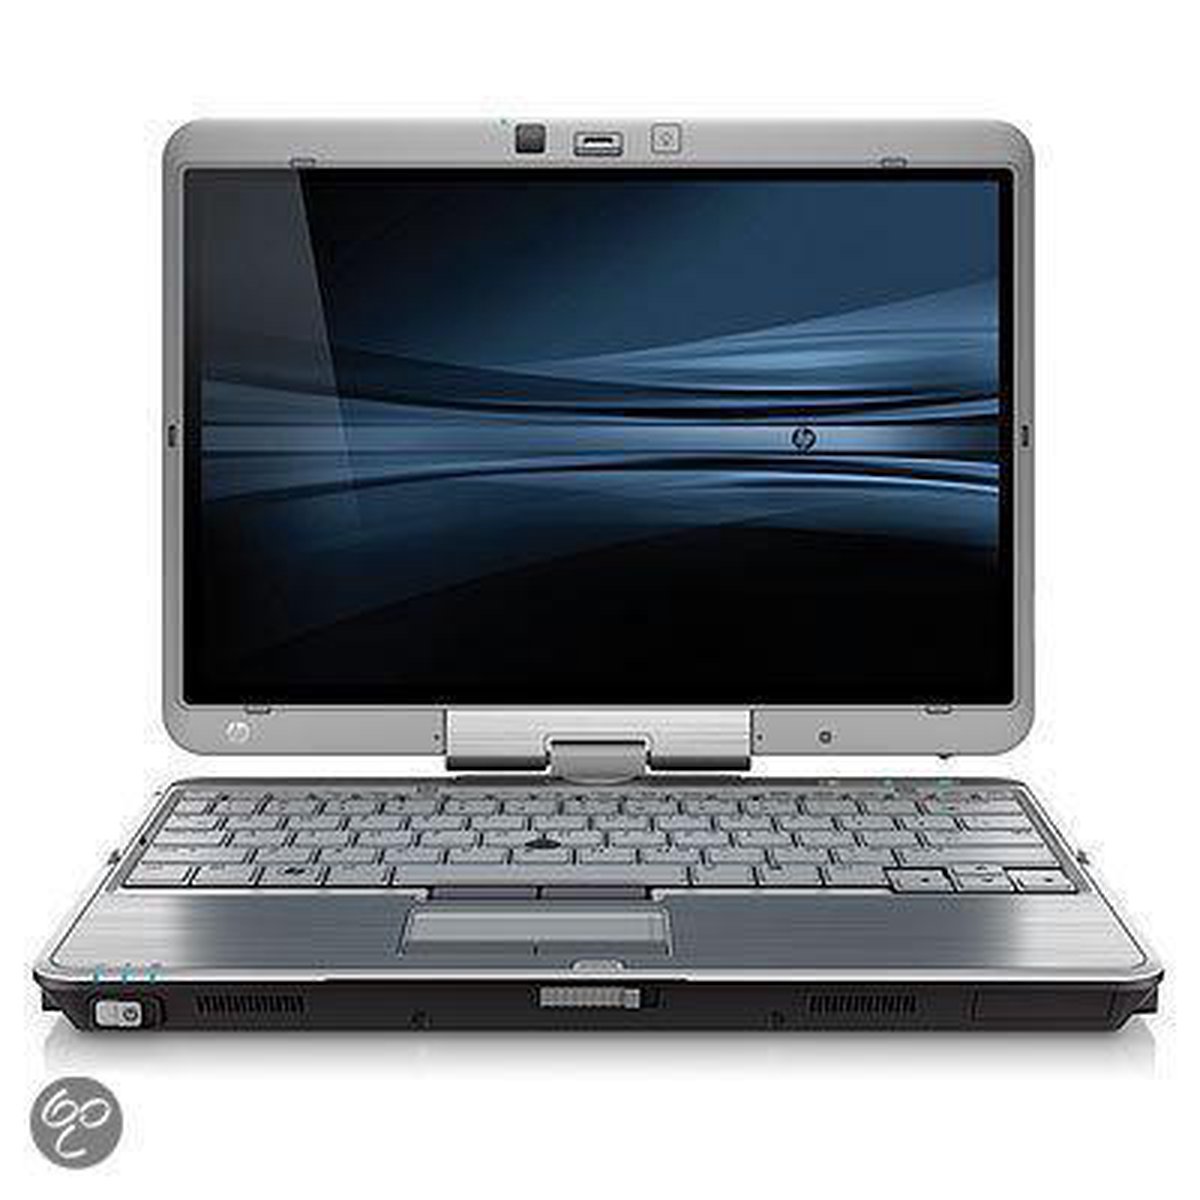 HP EliteBook 2740p -i5-540M Touchscreen Hybride (2-in-1) | bol.com